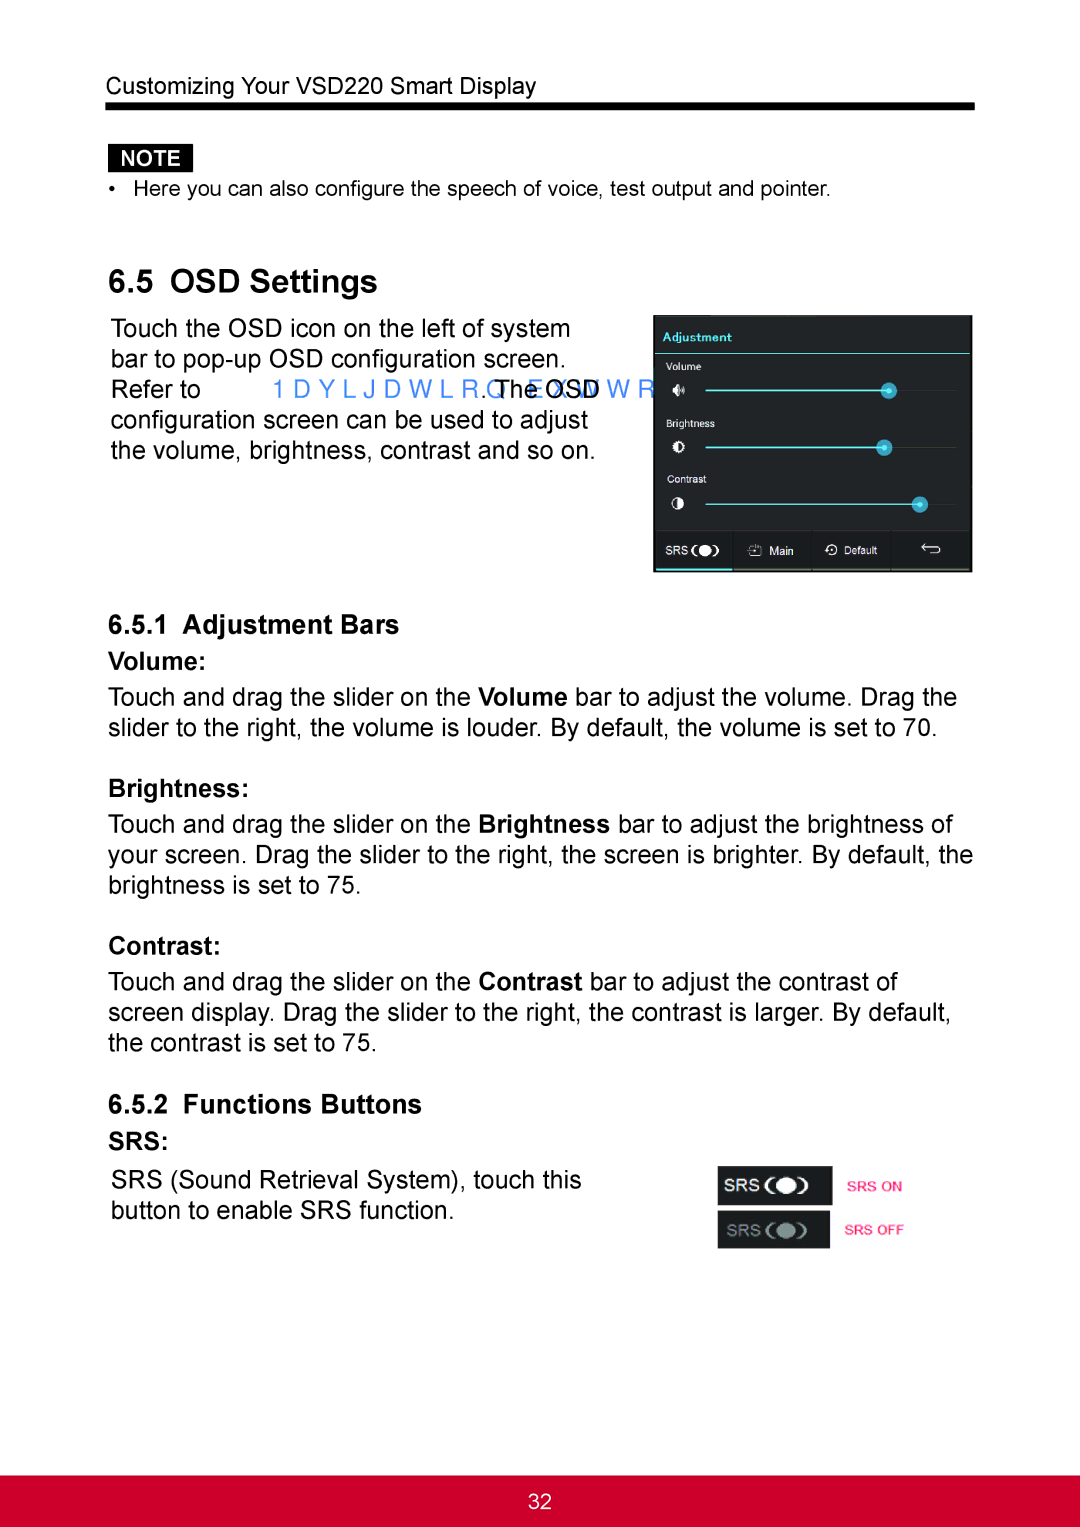 ViewSonic VSD220 manual OSD Settings, Adjustment Bars, Functions Buttons 